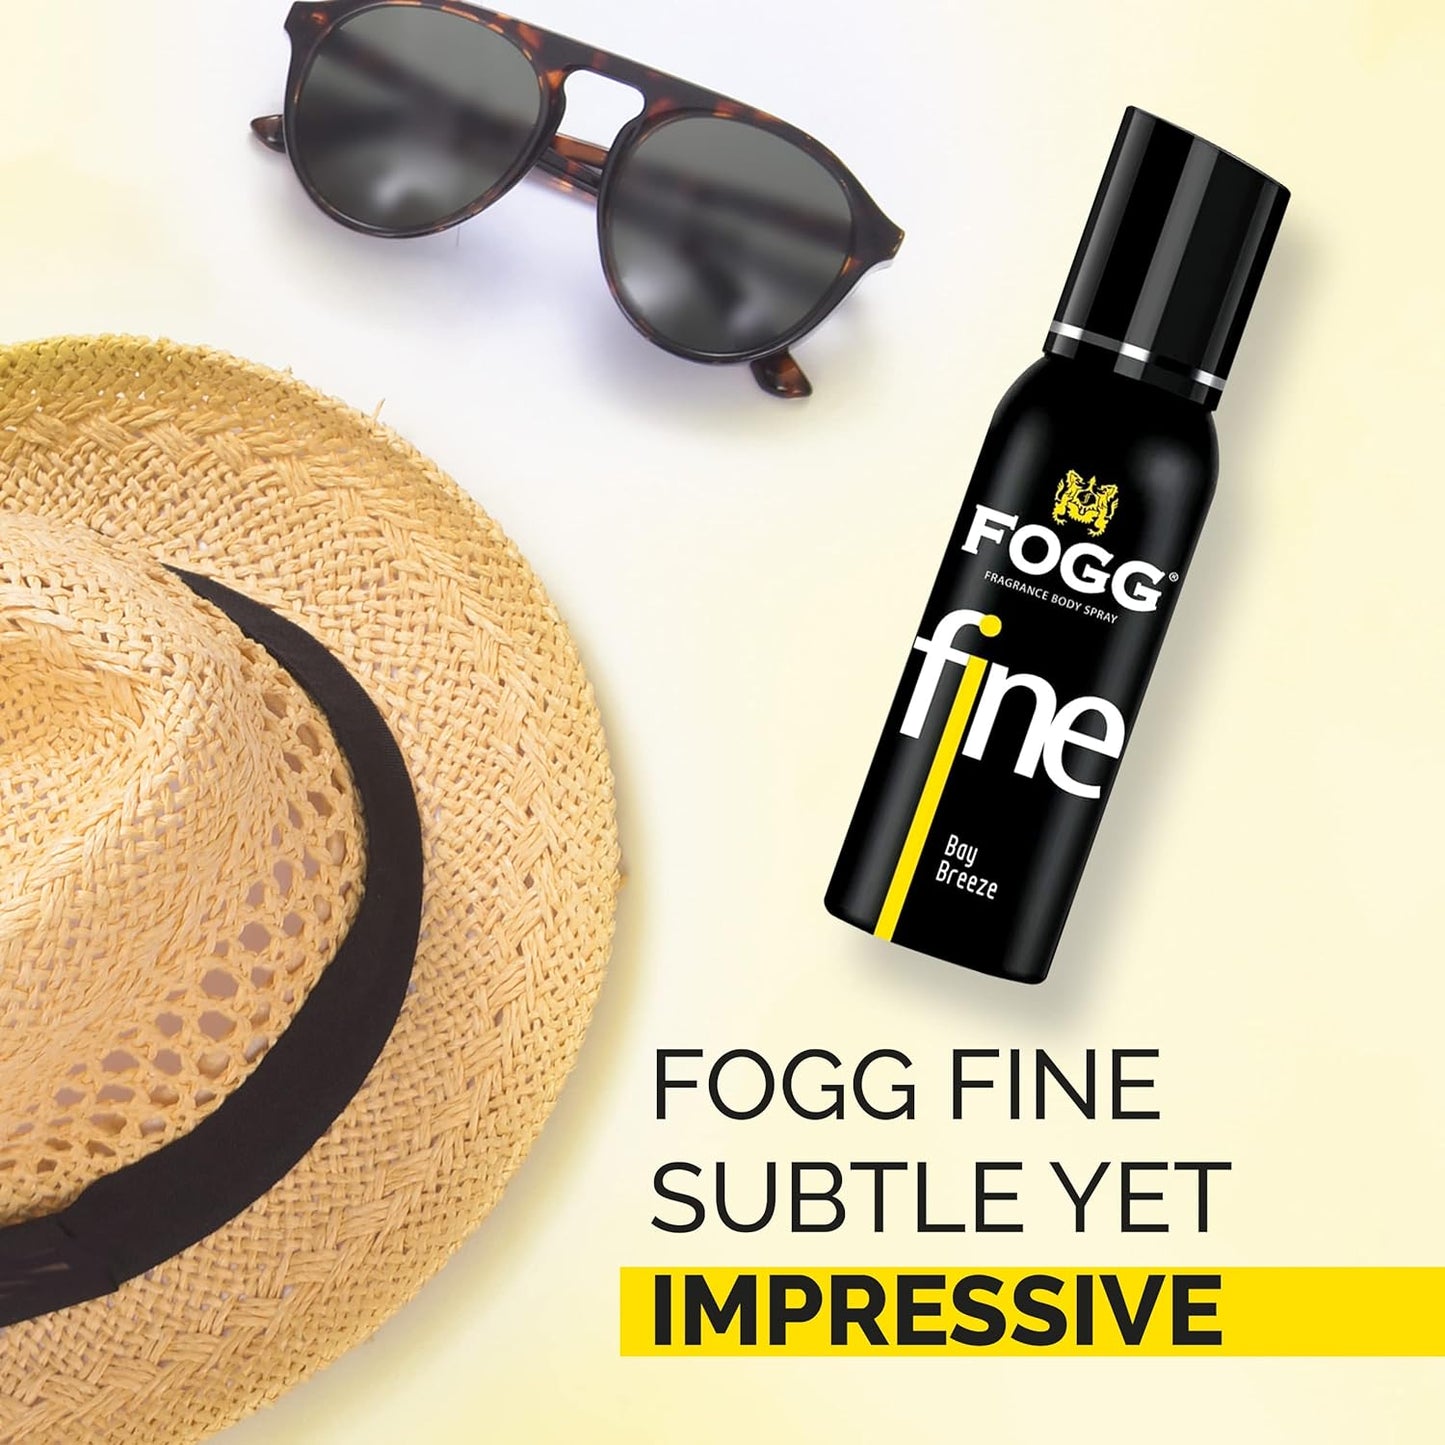 Fogg/ Fine Fragrance Body Spray/ Bay Breeze (120ml)